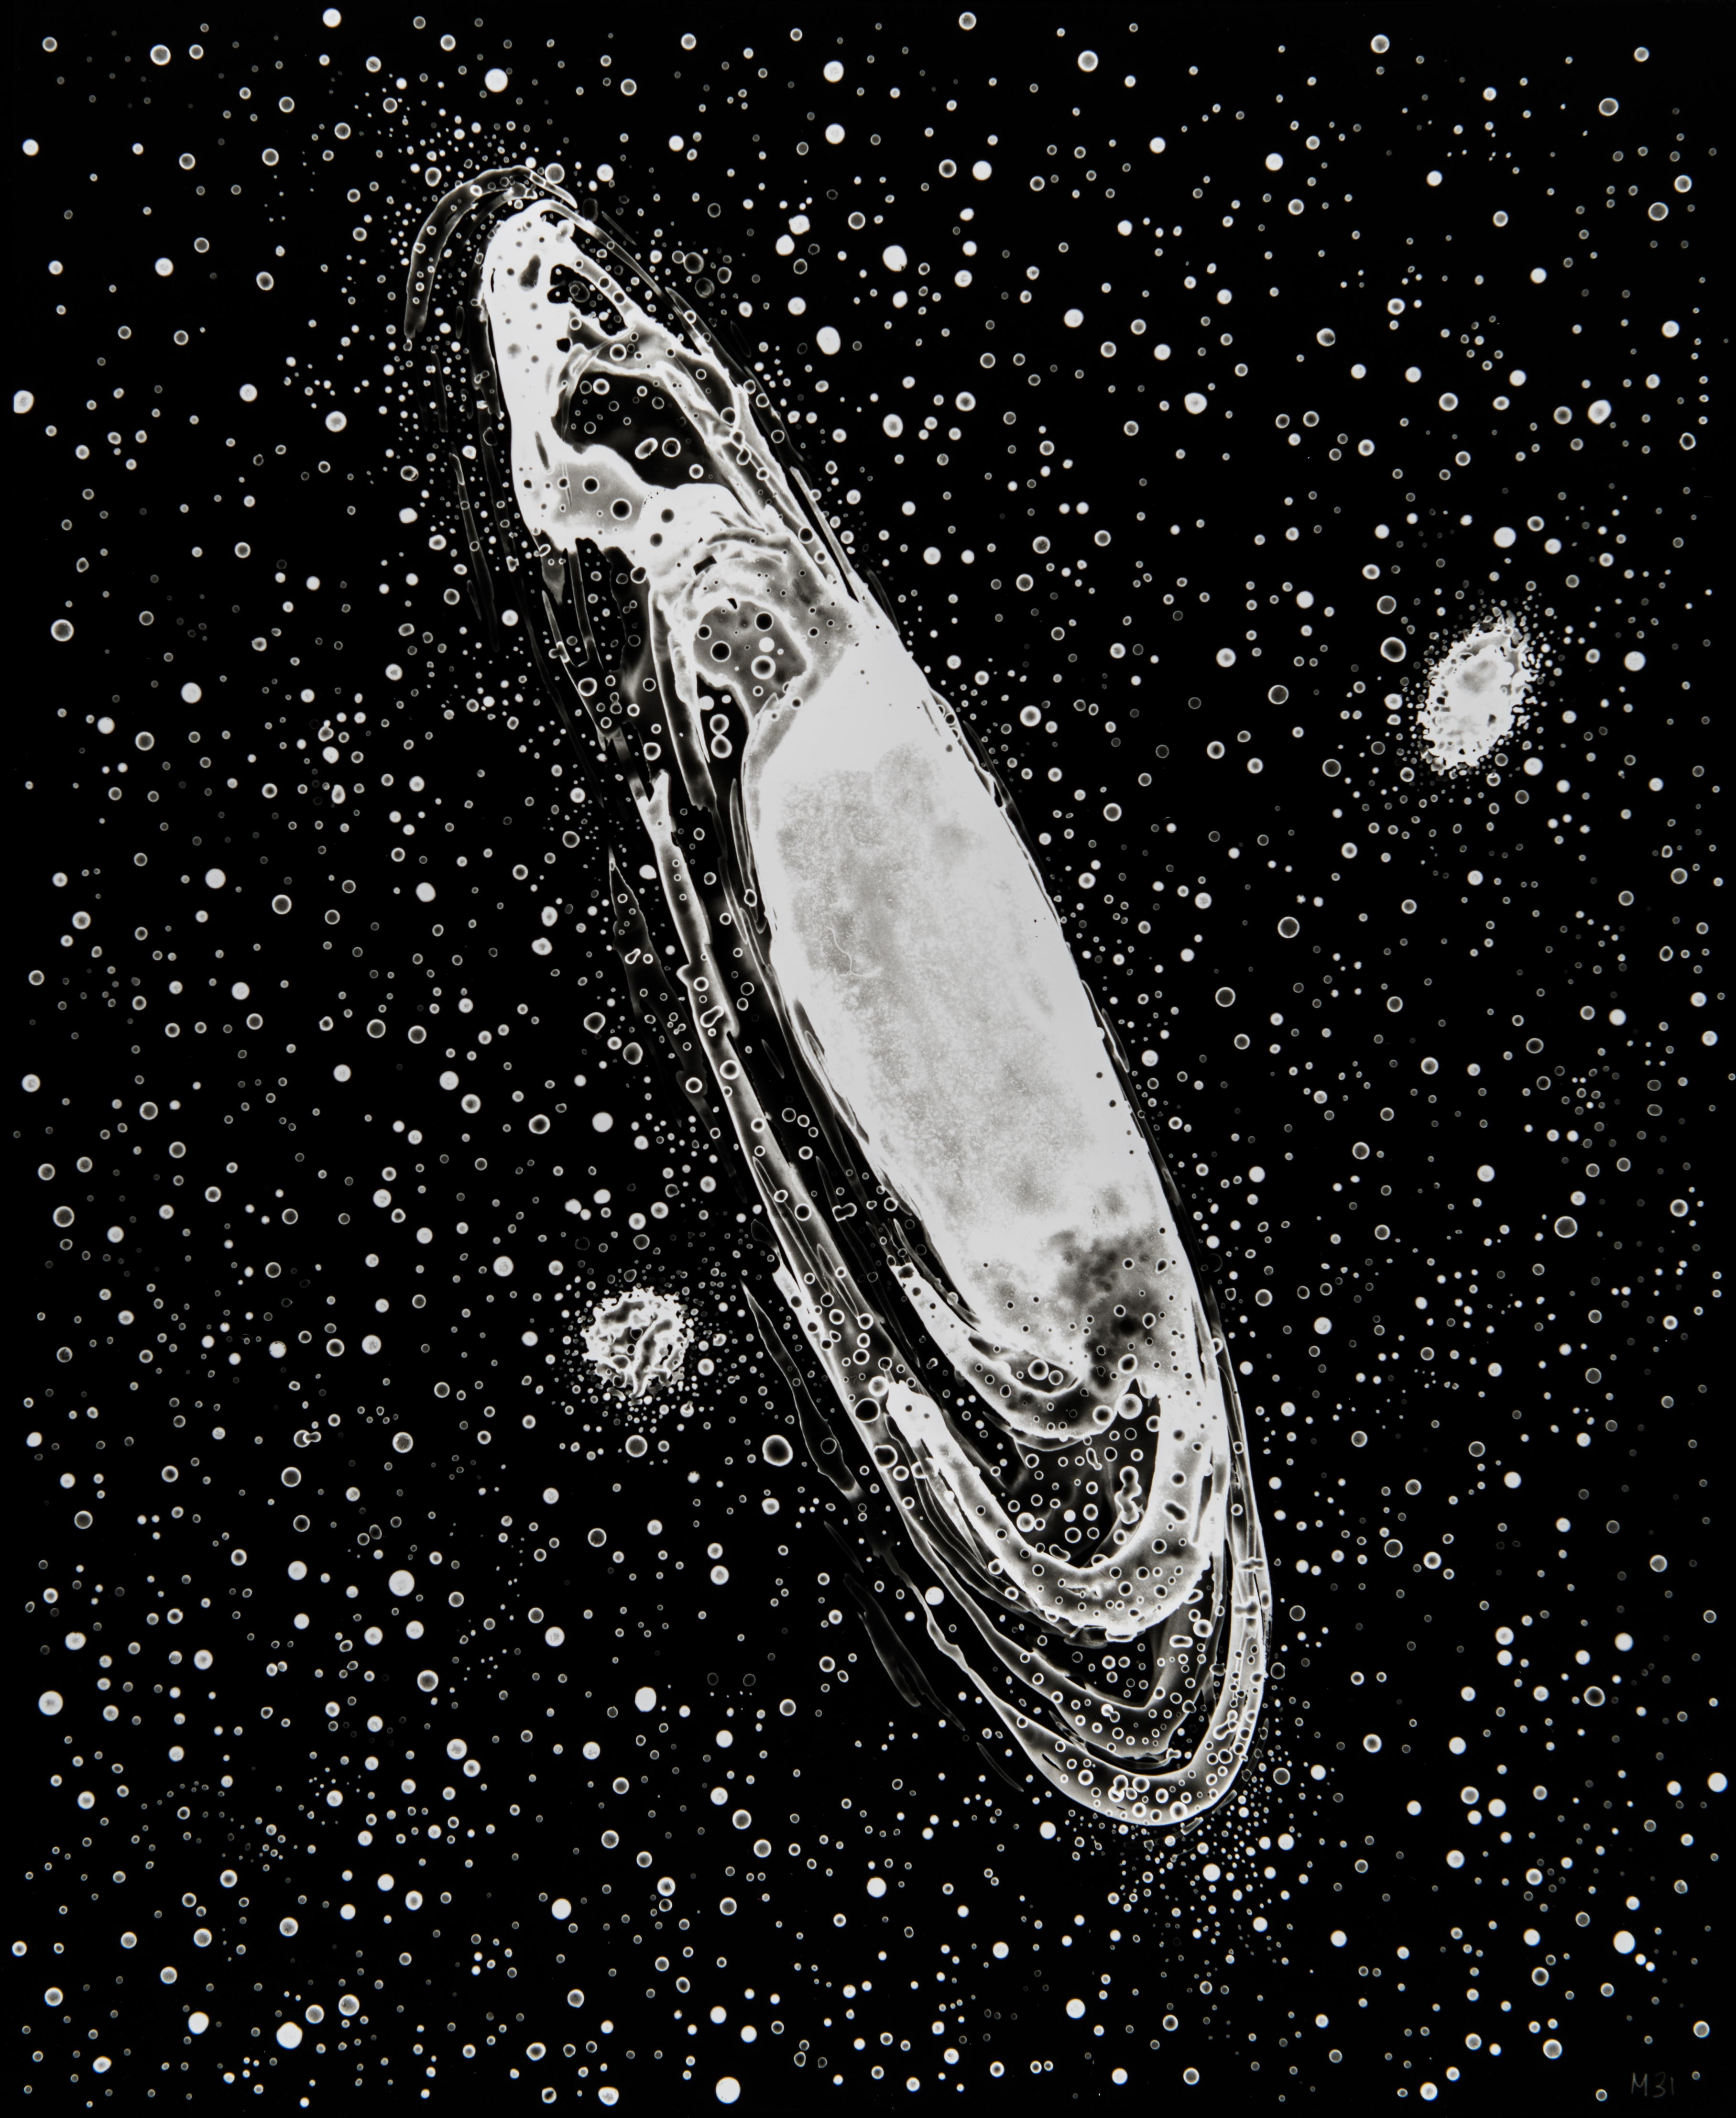 Print of M31 (Andromeda Galaxy), from "Deep Sky Companion" by Lia Halloran. Credit: Lia Halloran